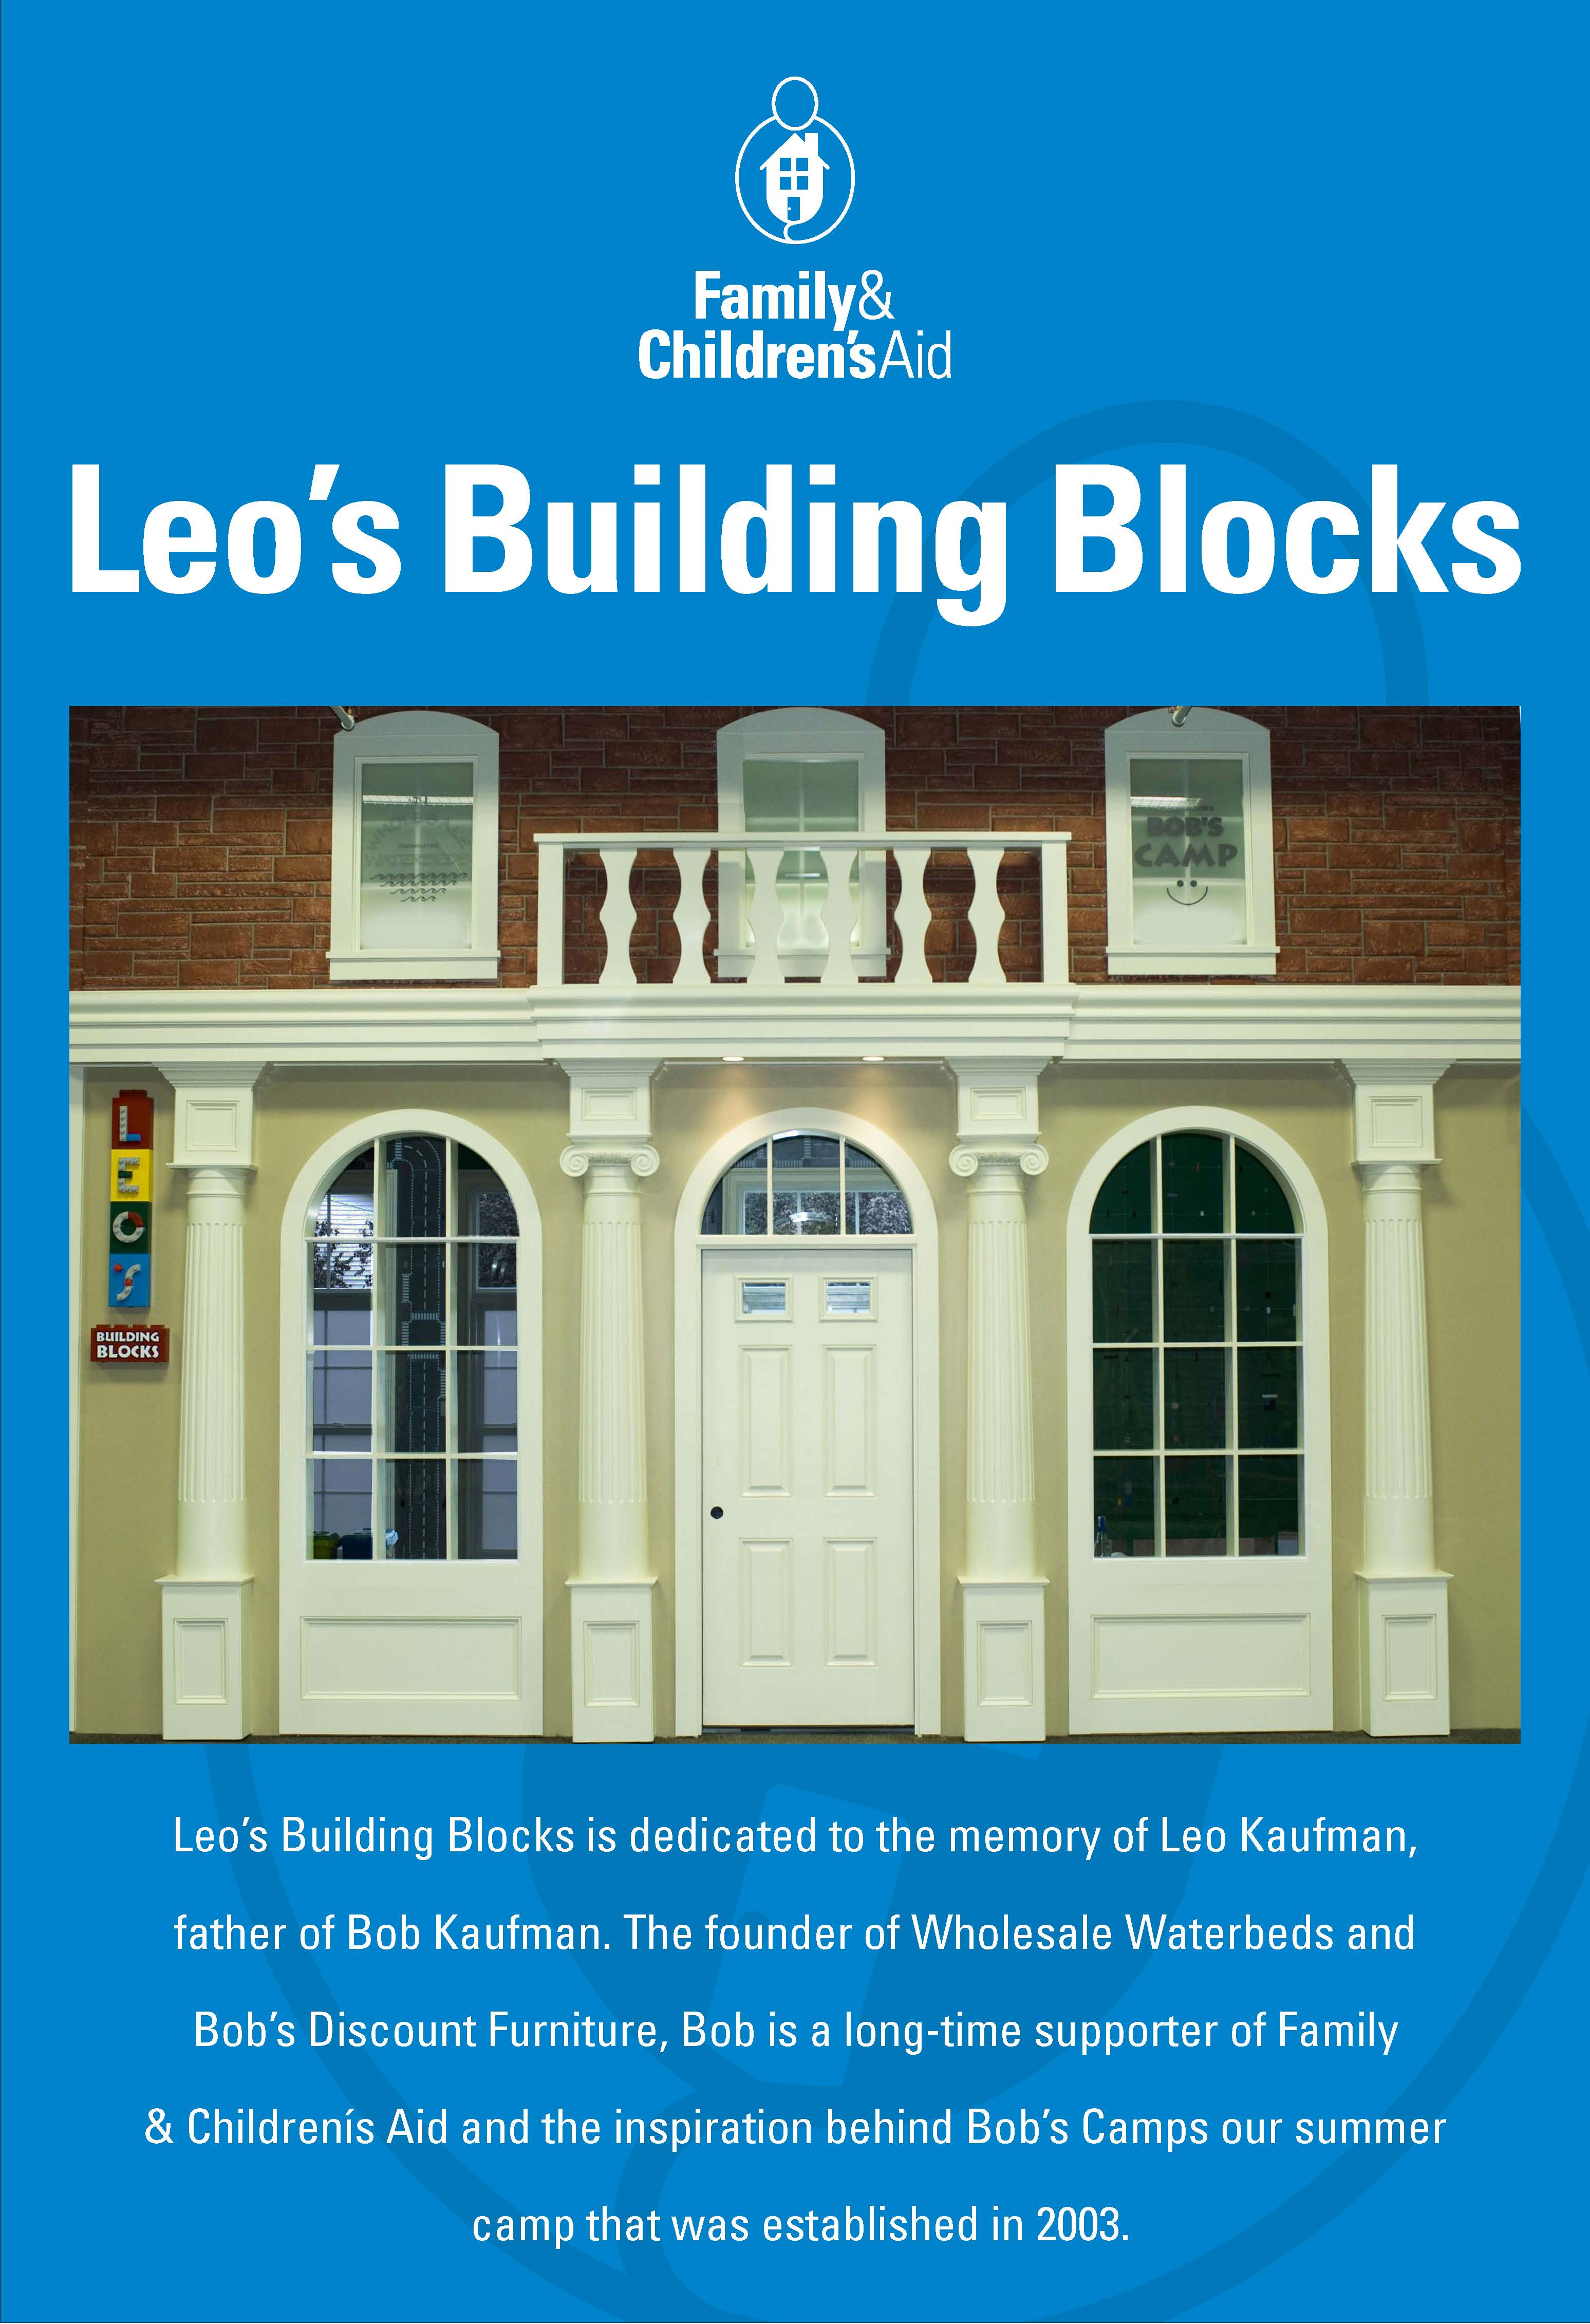 Leo's Building Blocks in Playmaker Village